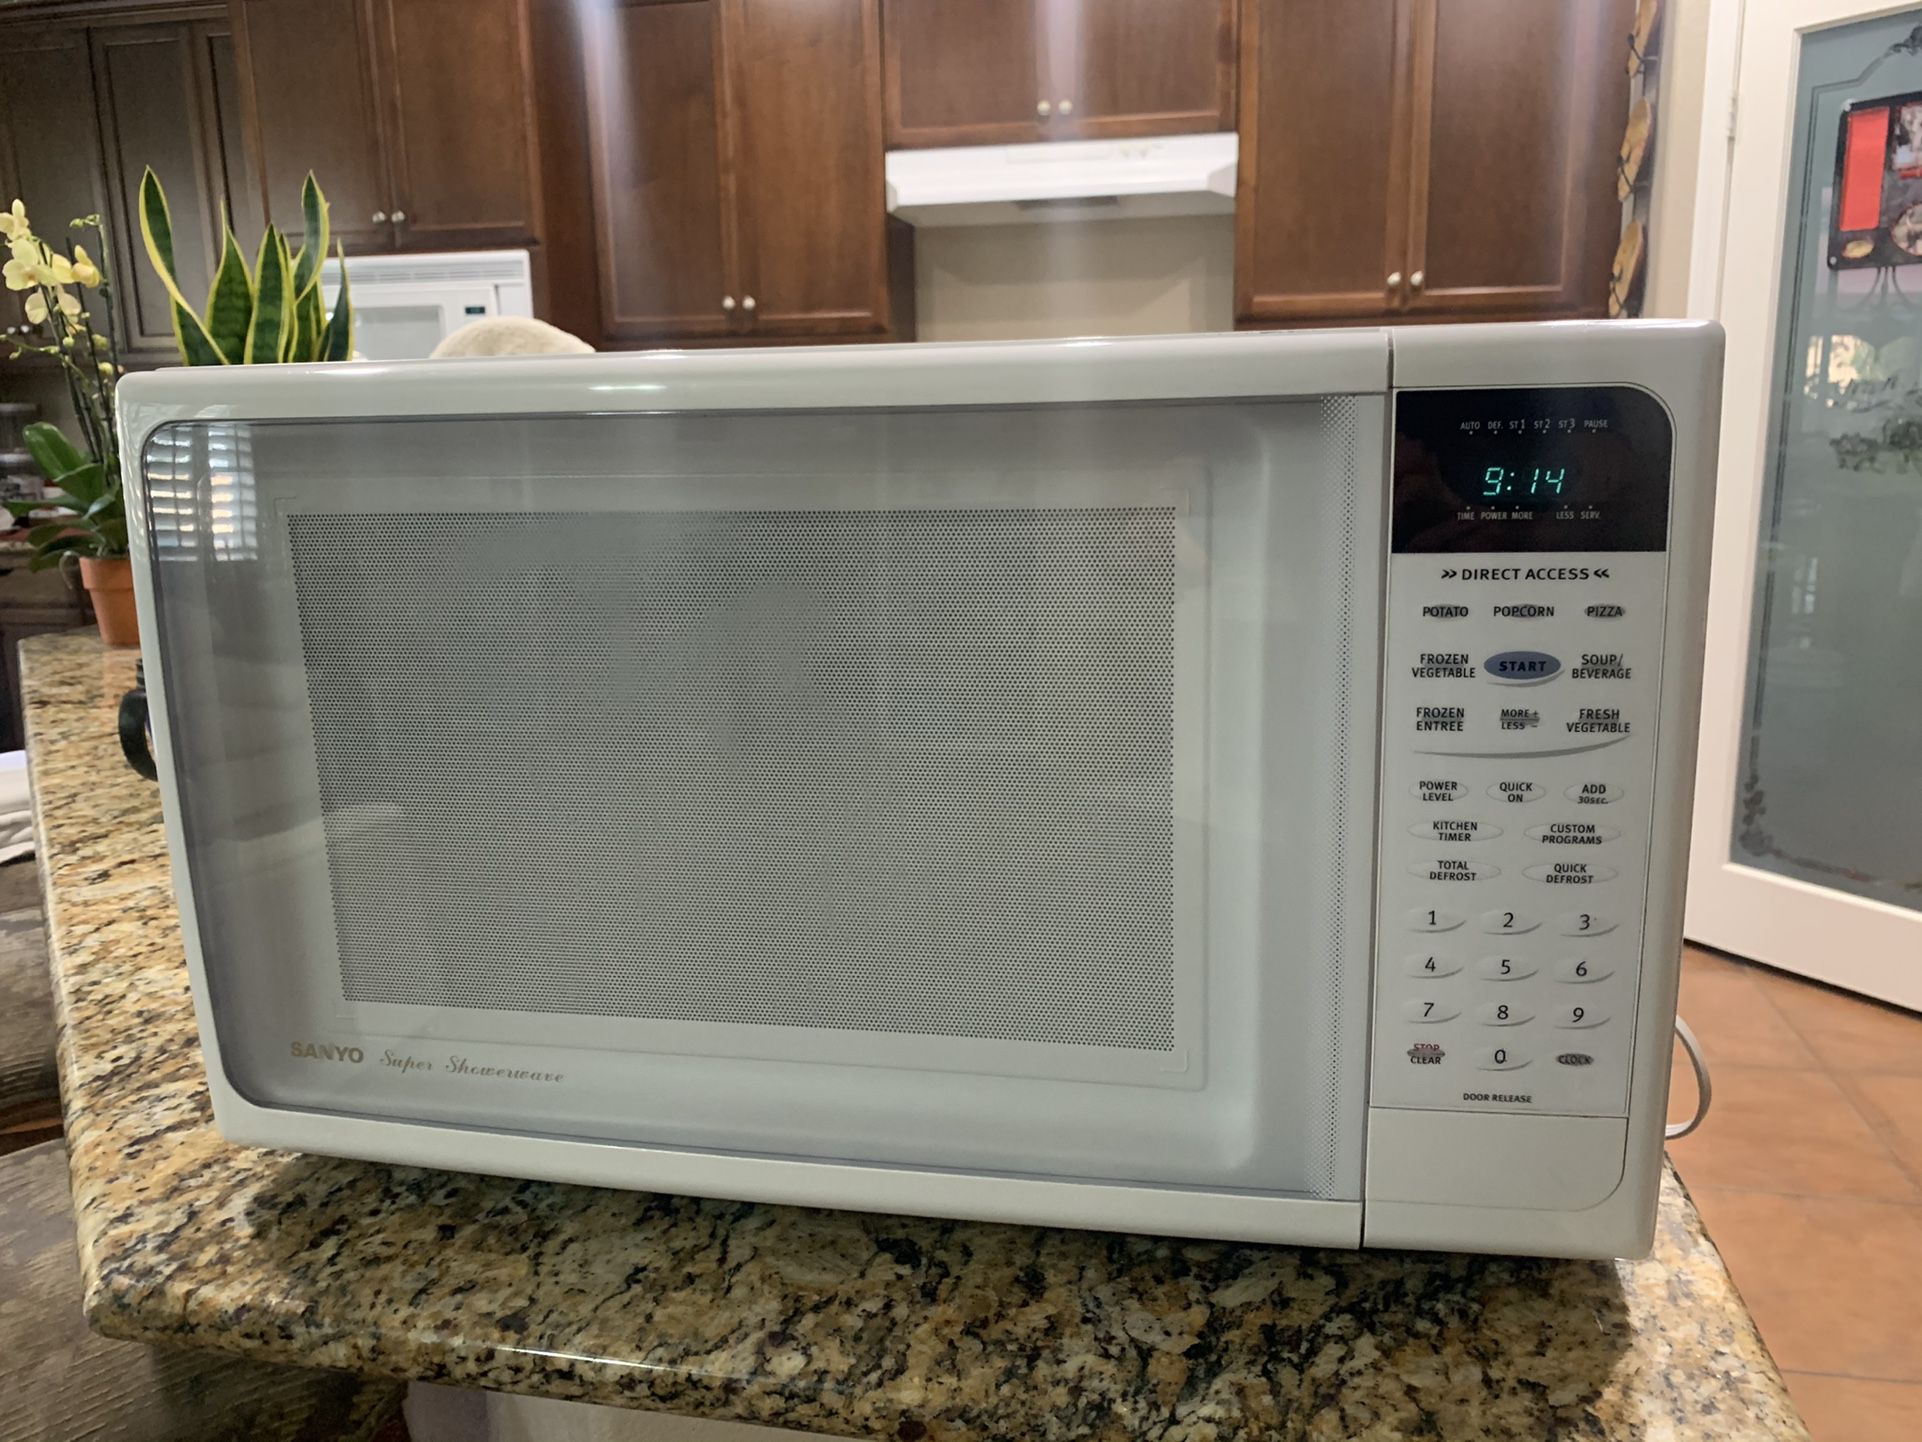 Sanyo Super Showerwave 1100 Watt Microwave Oven